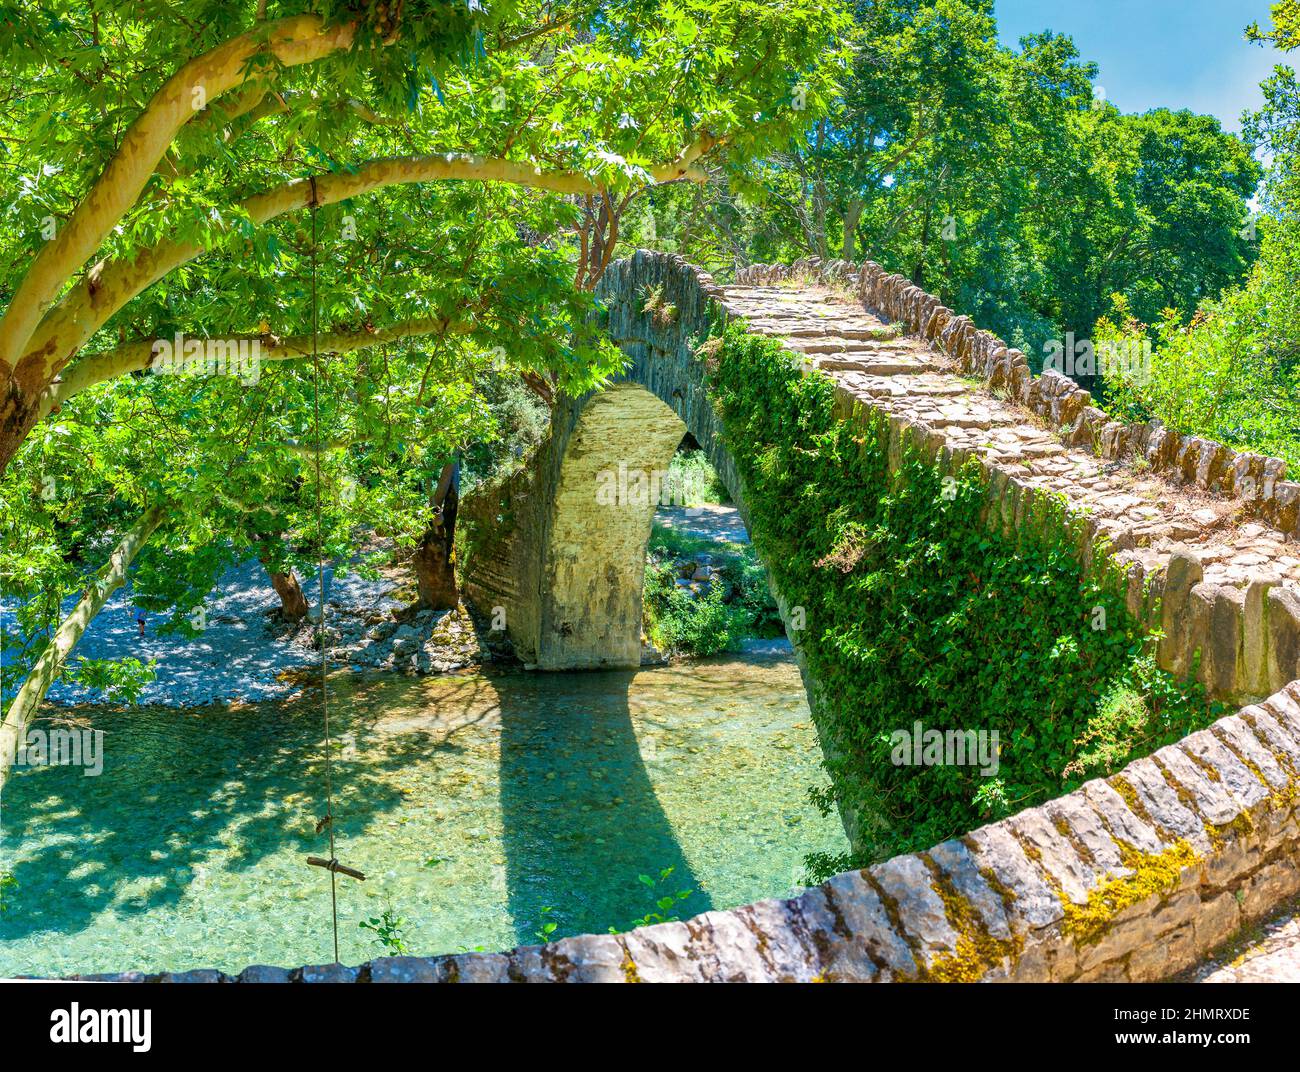 View of the old stone bridge Noutsos located in central Greece, Zagori, Europe Stock Photo